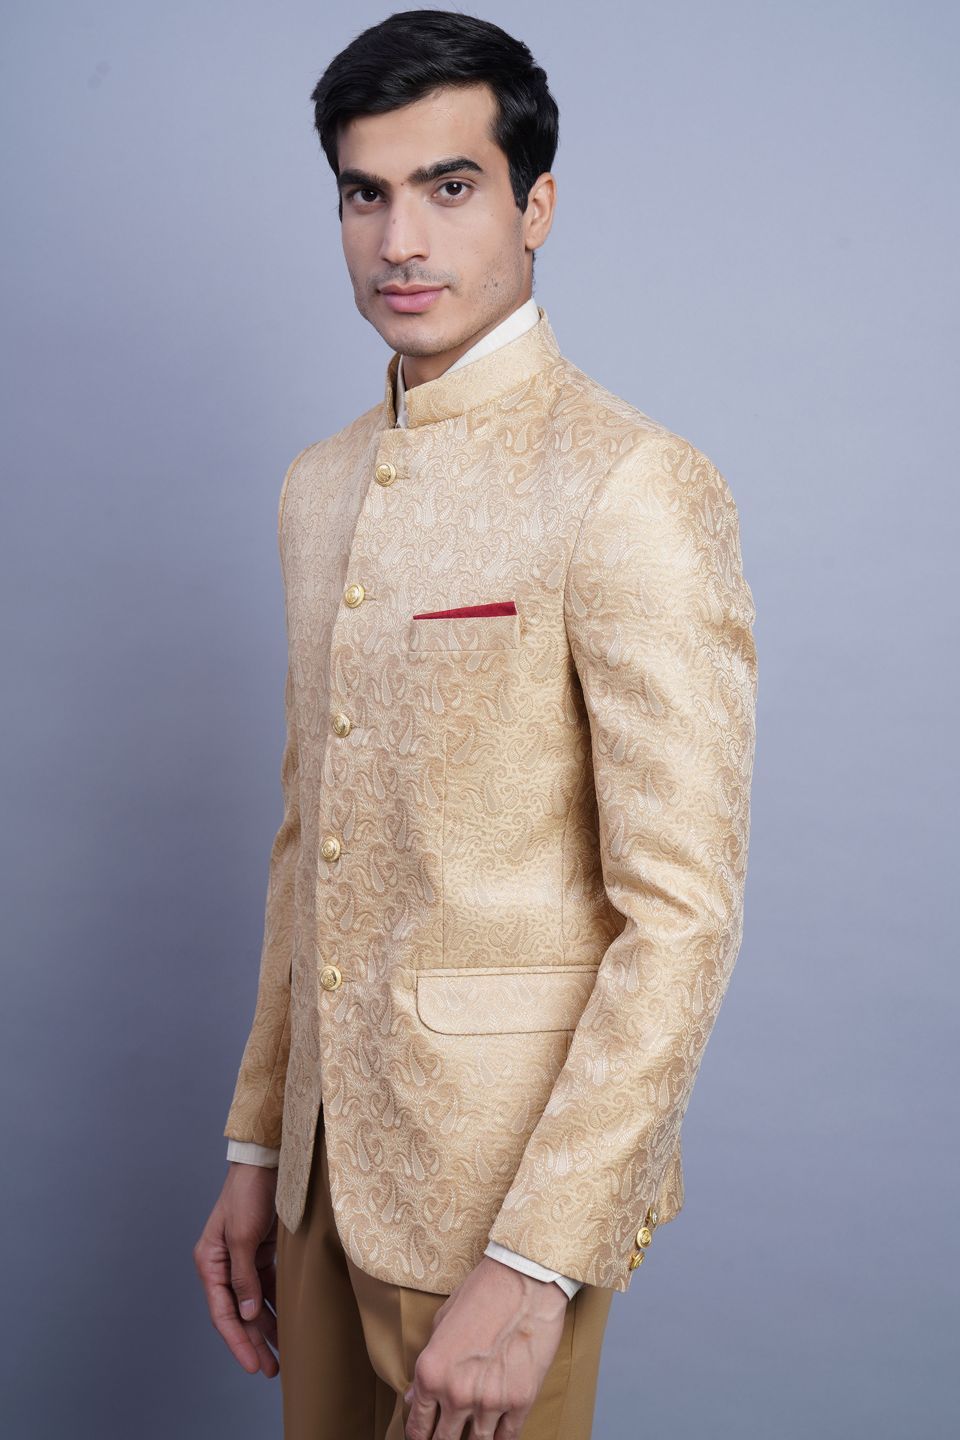 Wintage Men's Banarsi Rayon Cotton Casual and Festive Indian Jodhpuri Grandad Bandhgala Blazer : Beige